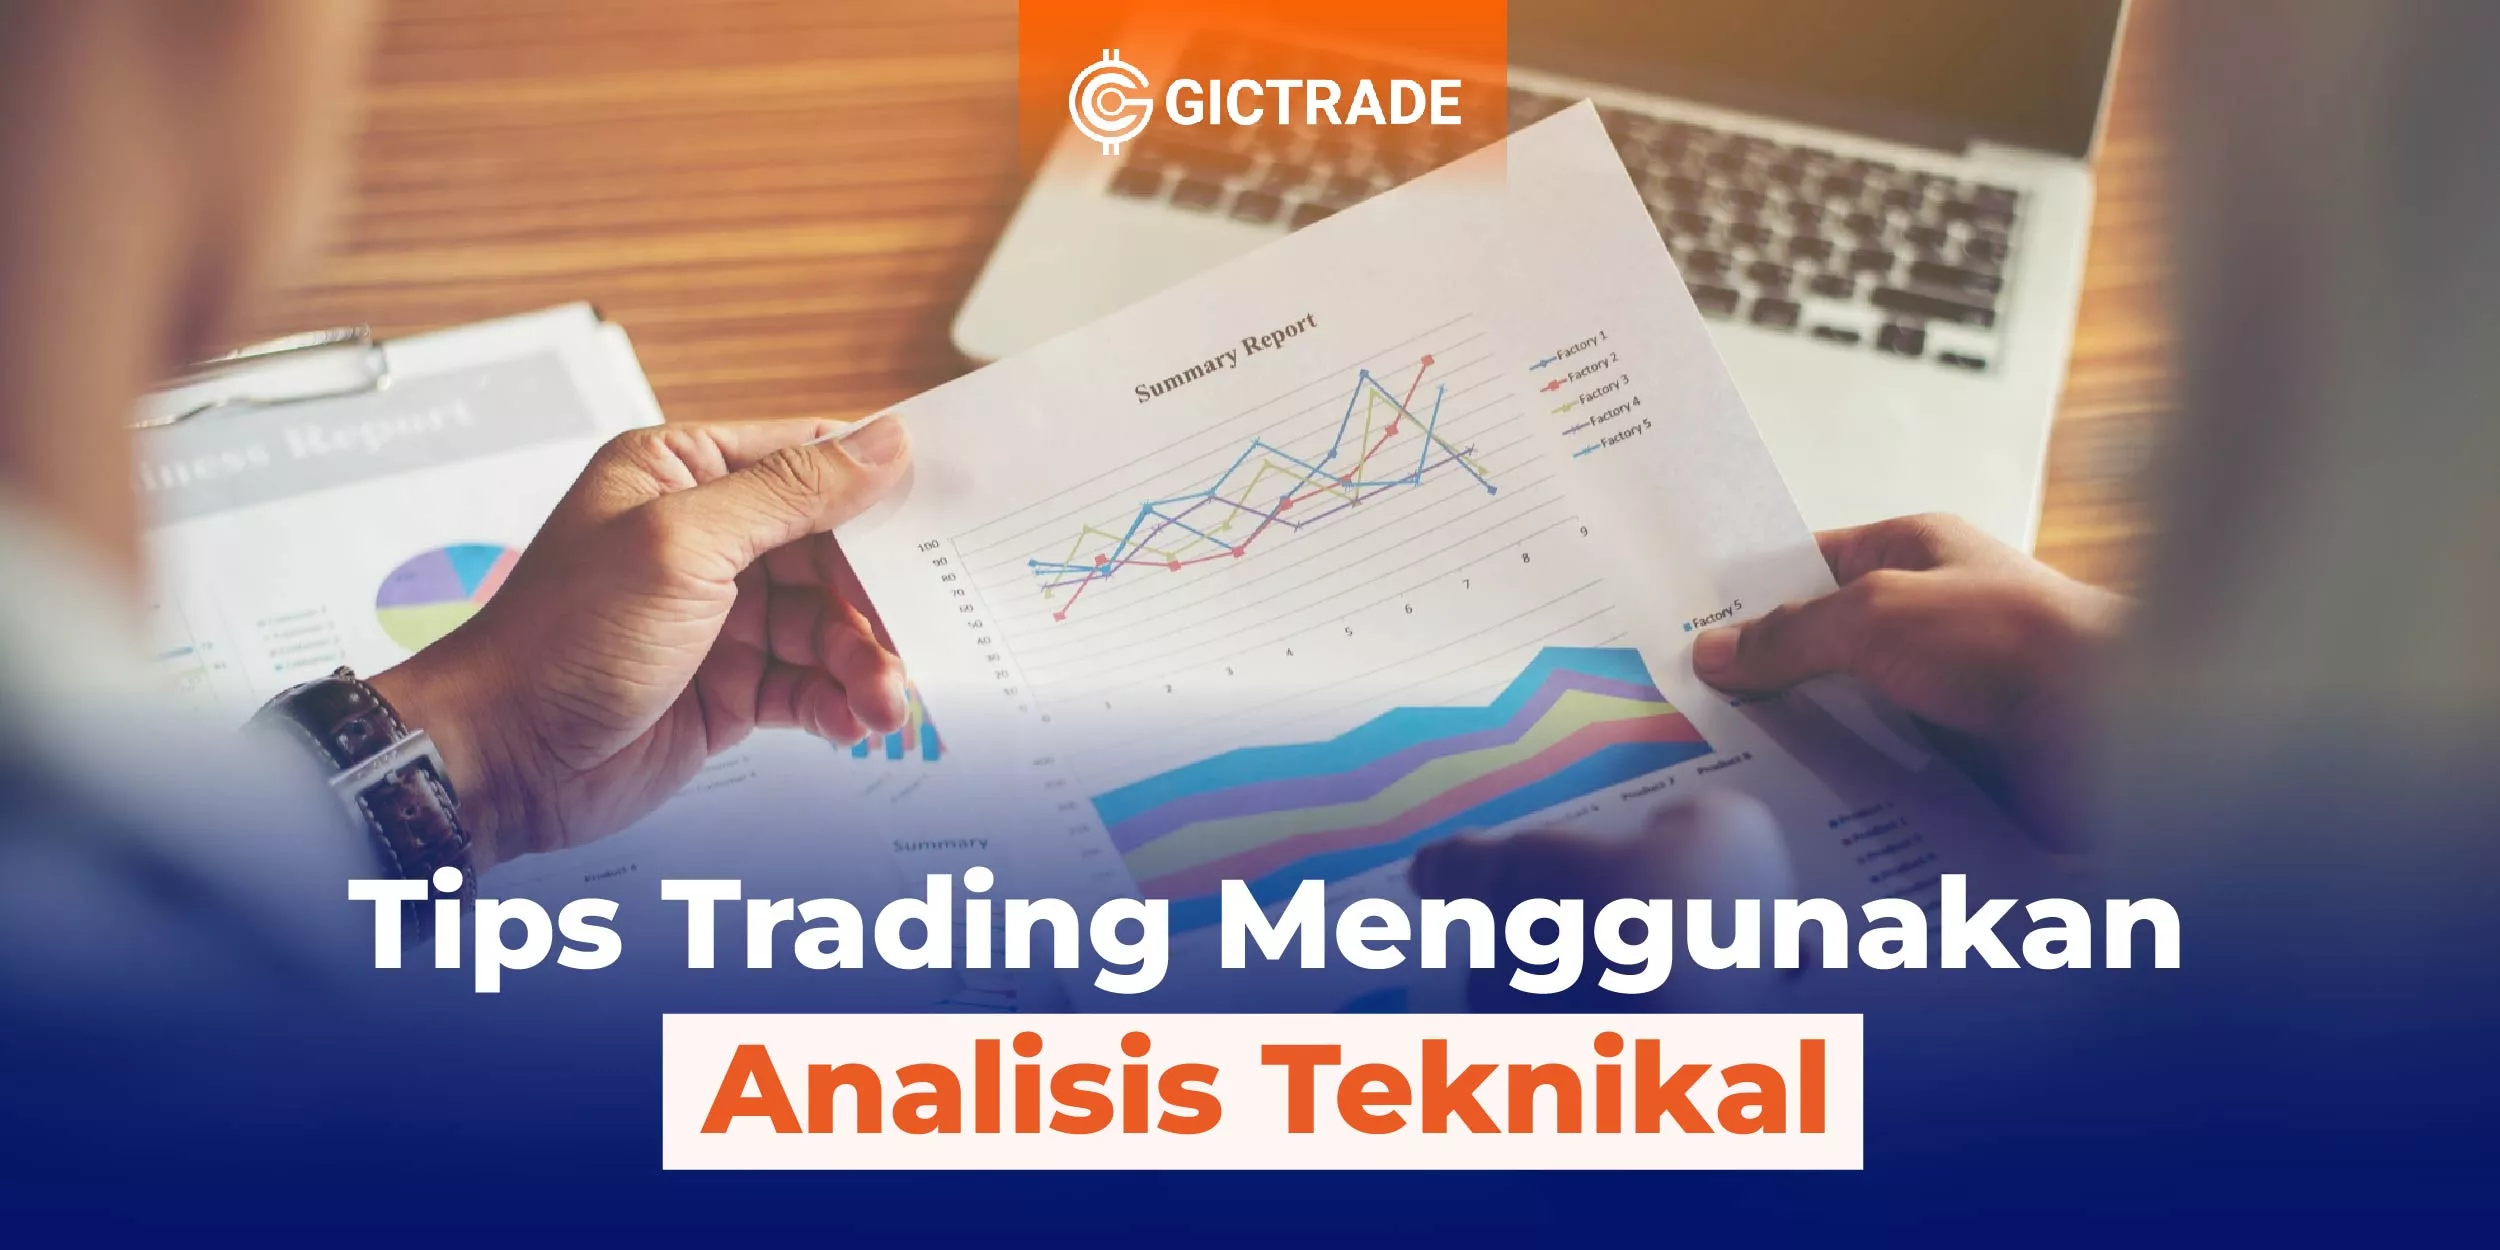 Tips Trading Menggunakan Analisis Teknikal